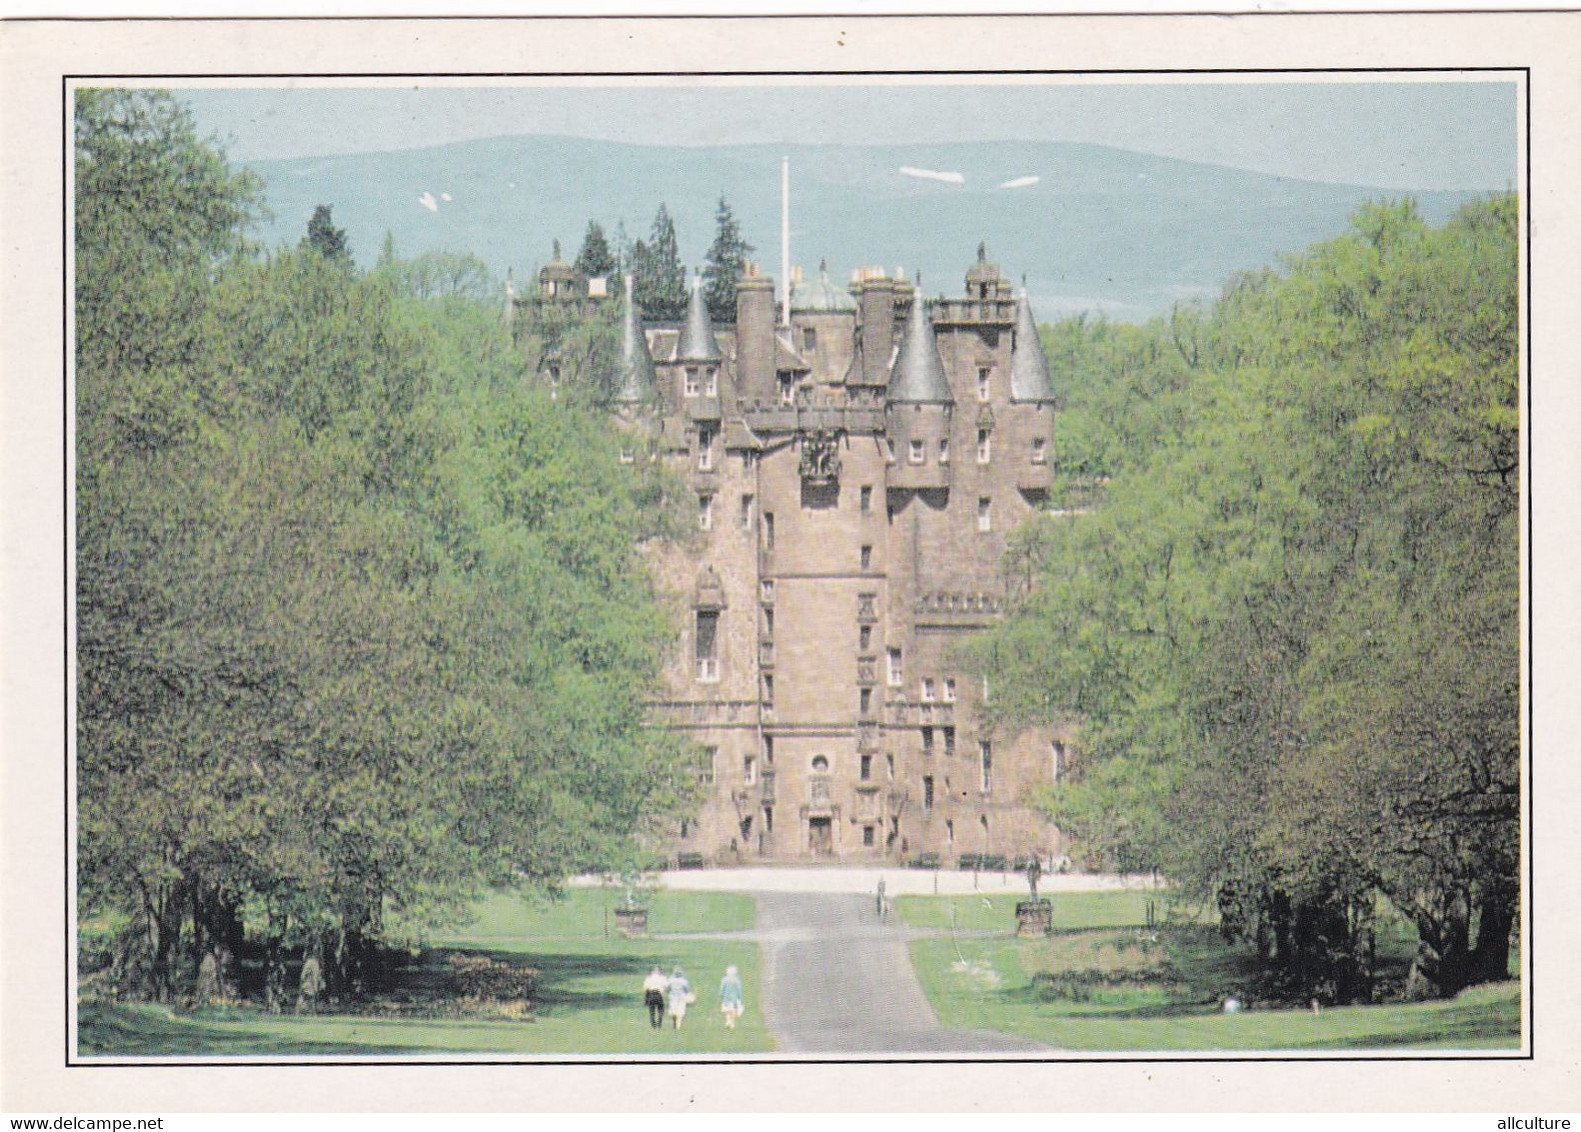 A4666- Le Chateau De Glamis, Glamis Castle Angus Scotland United Kingdom - Angus